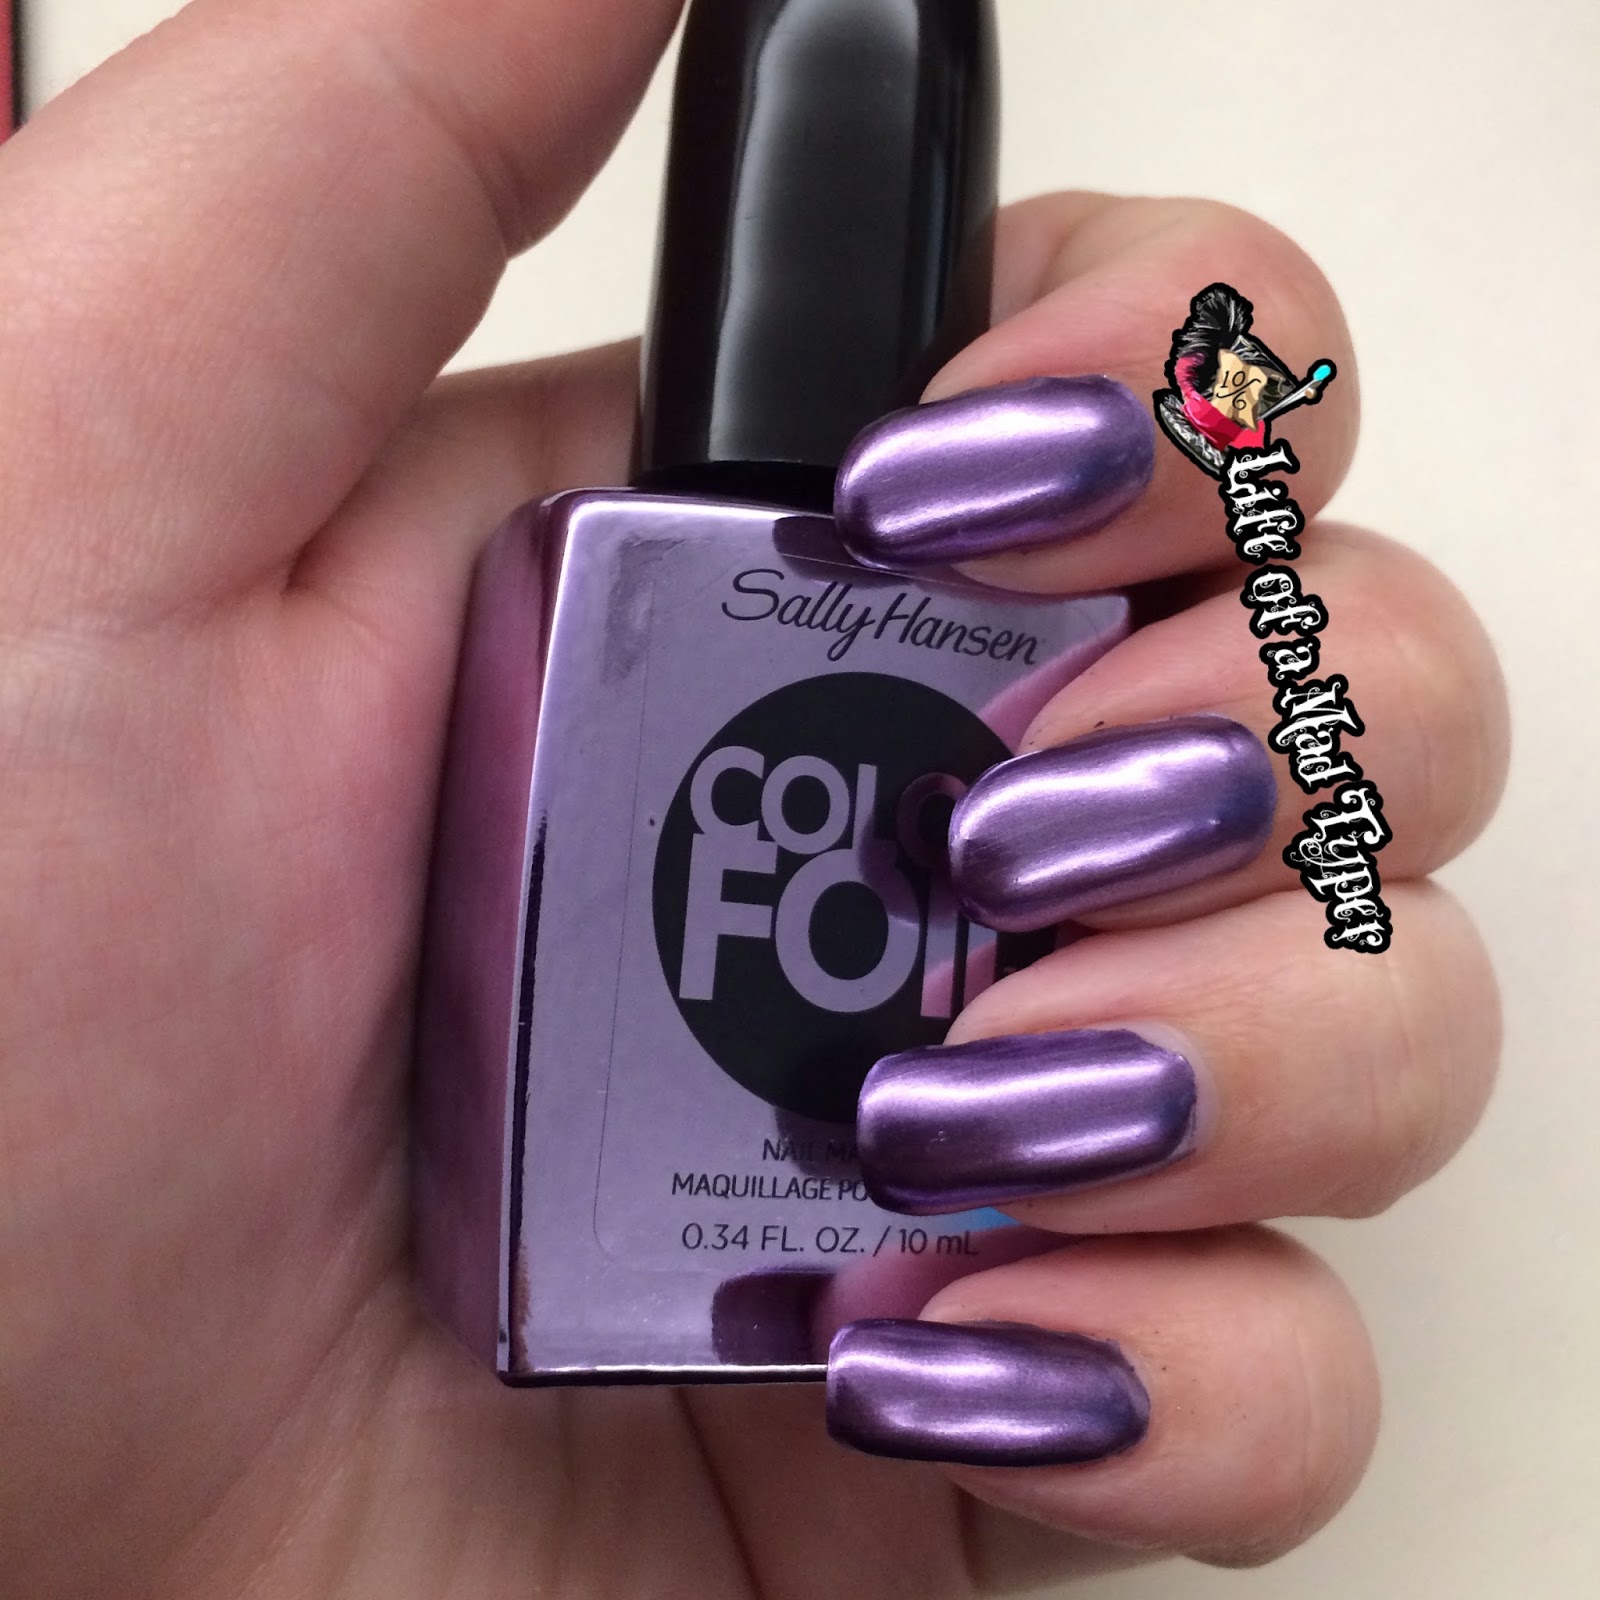 Sally Hansen ColorFoil Purple alloy